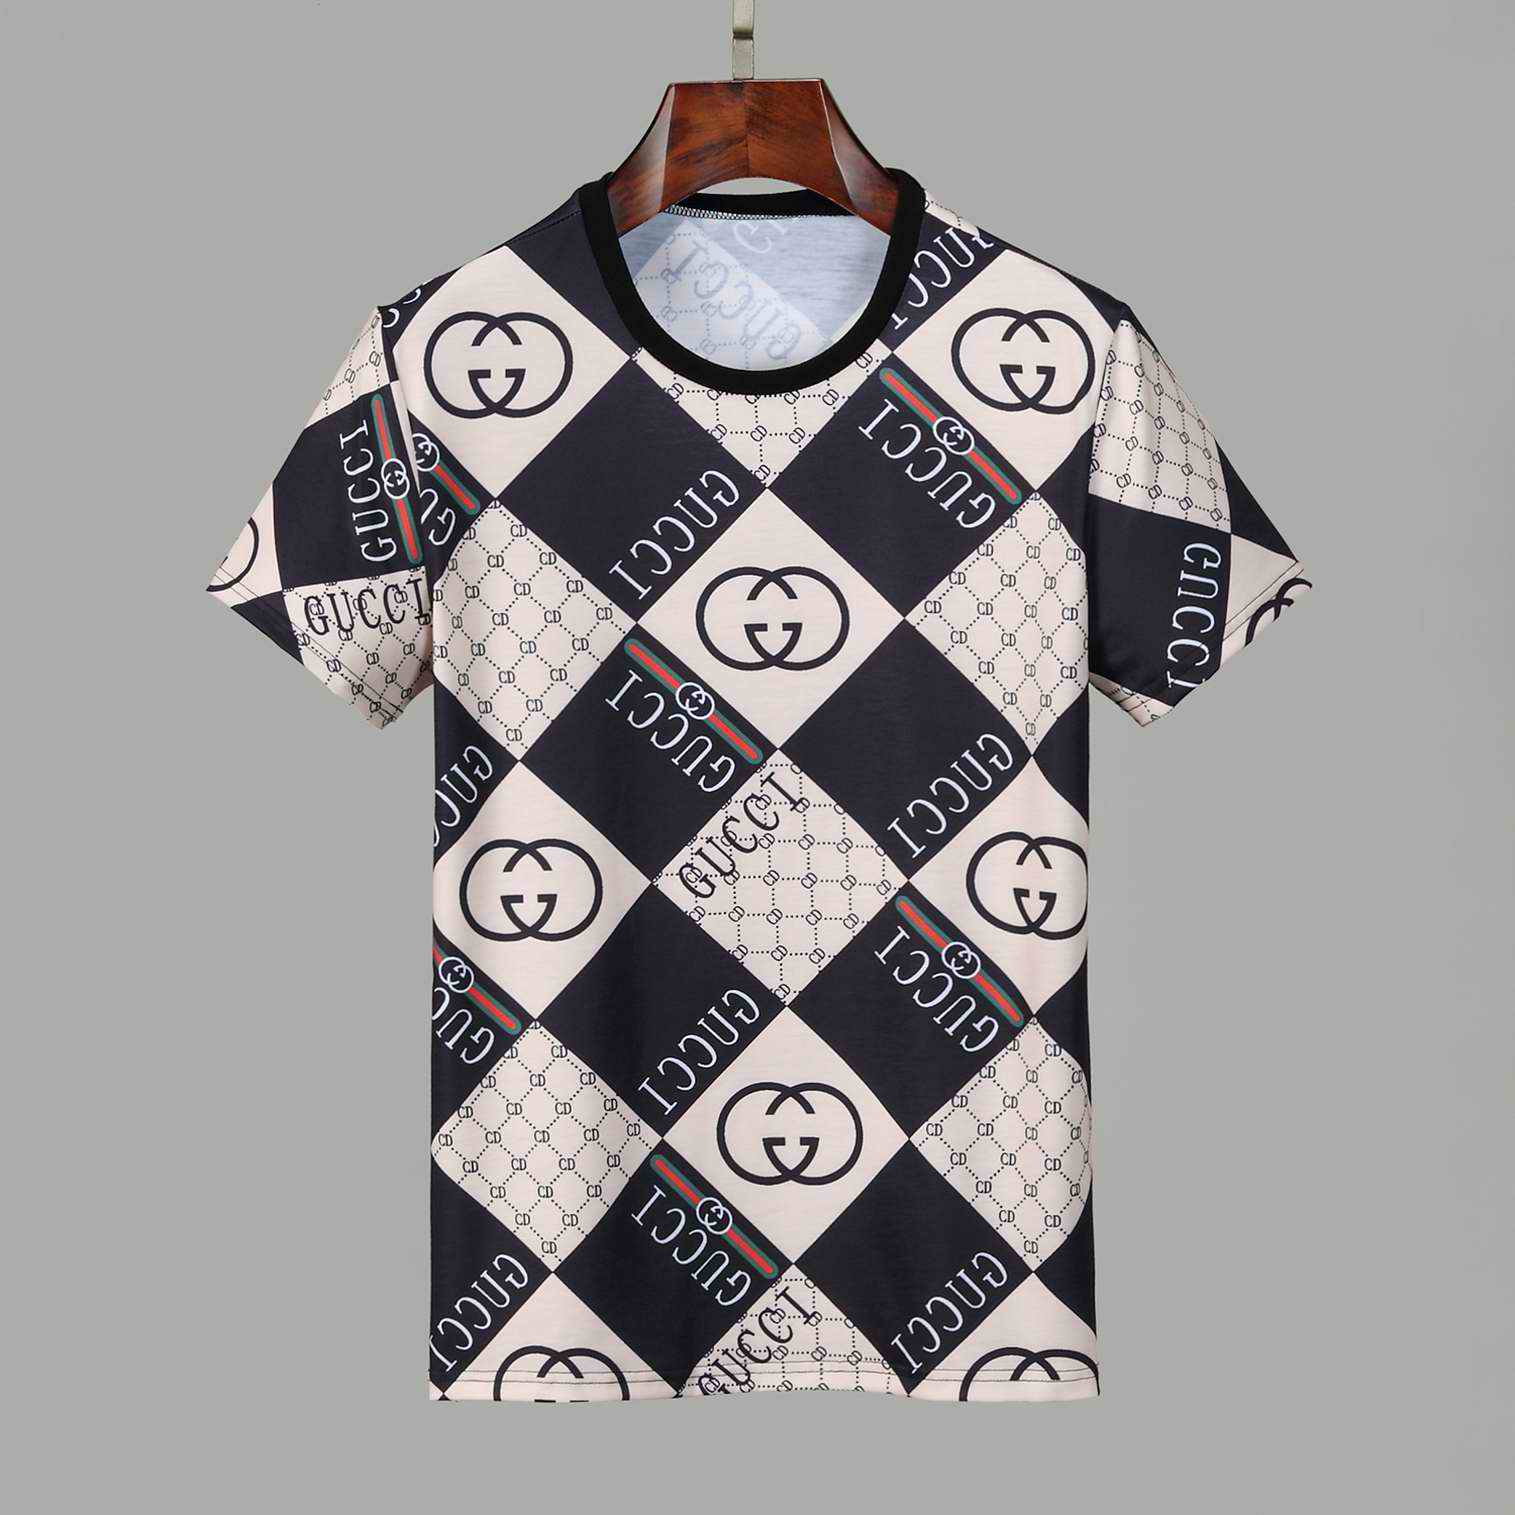  Gucci Shirts 008